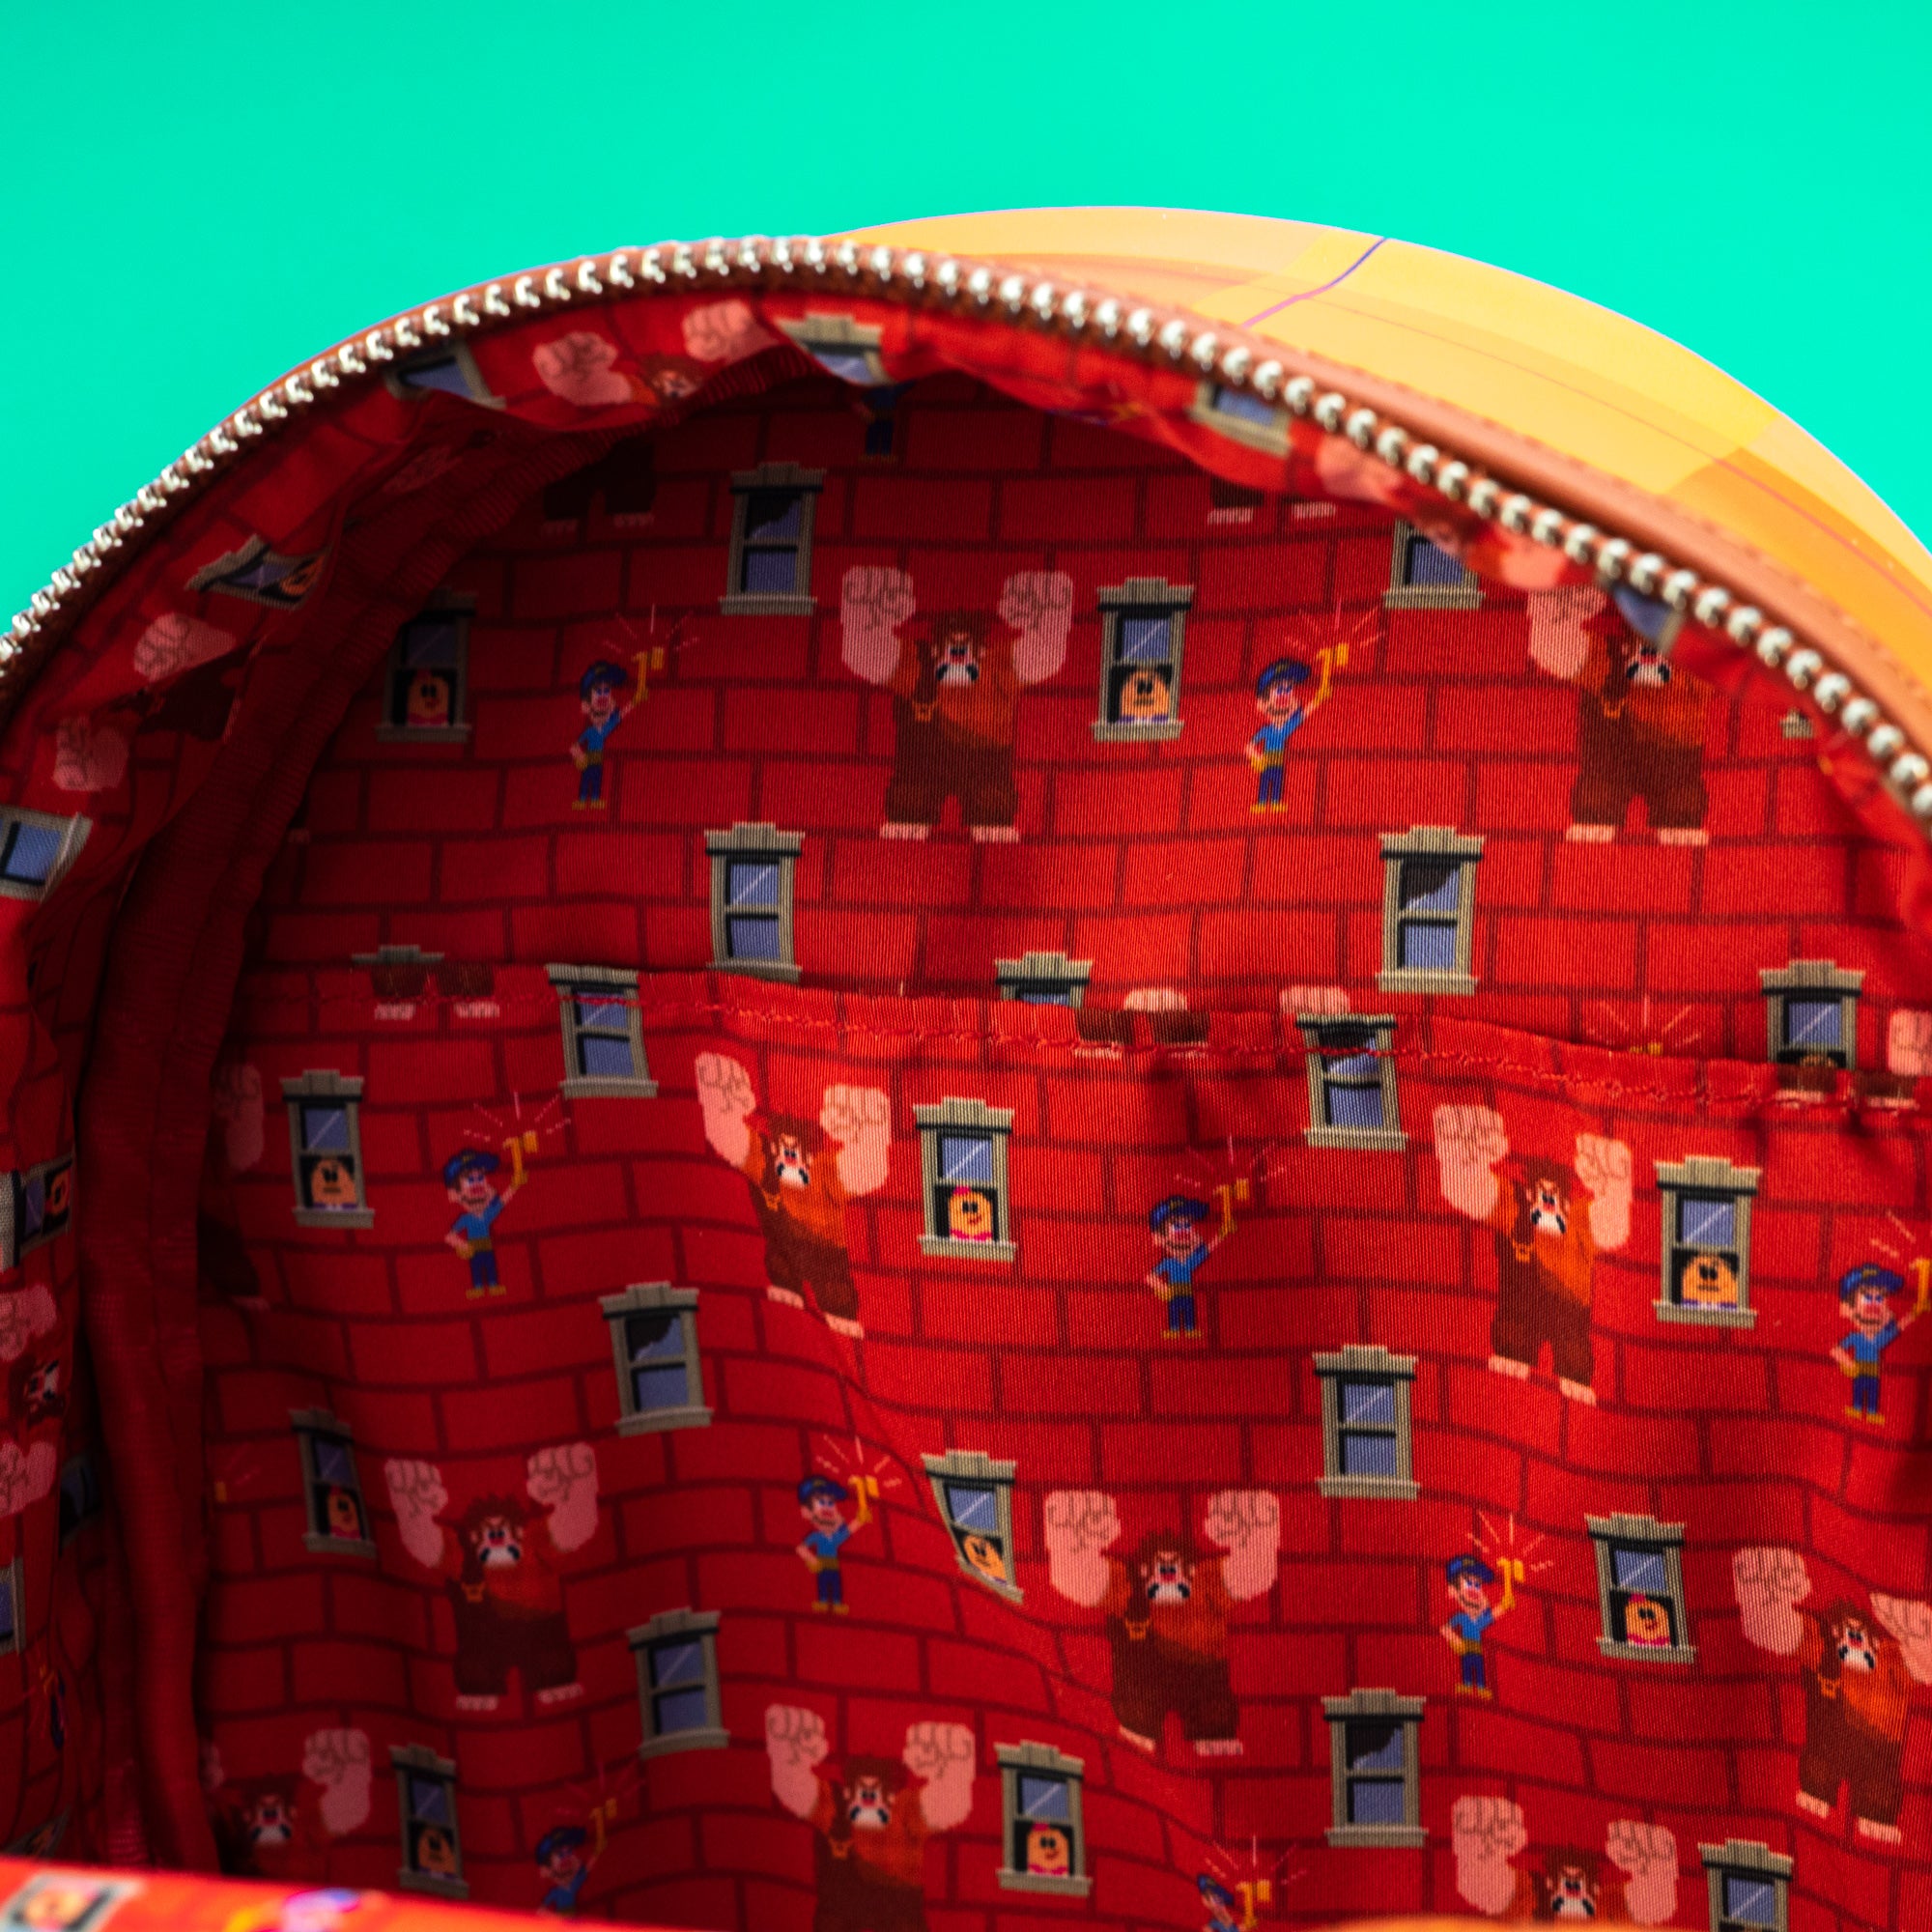 Loungefly x Disney Wreck It Ralph Mini Backpack